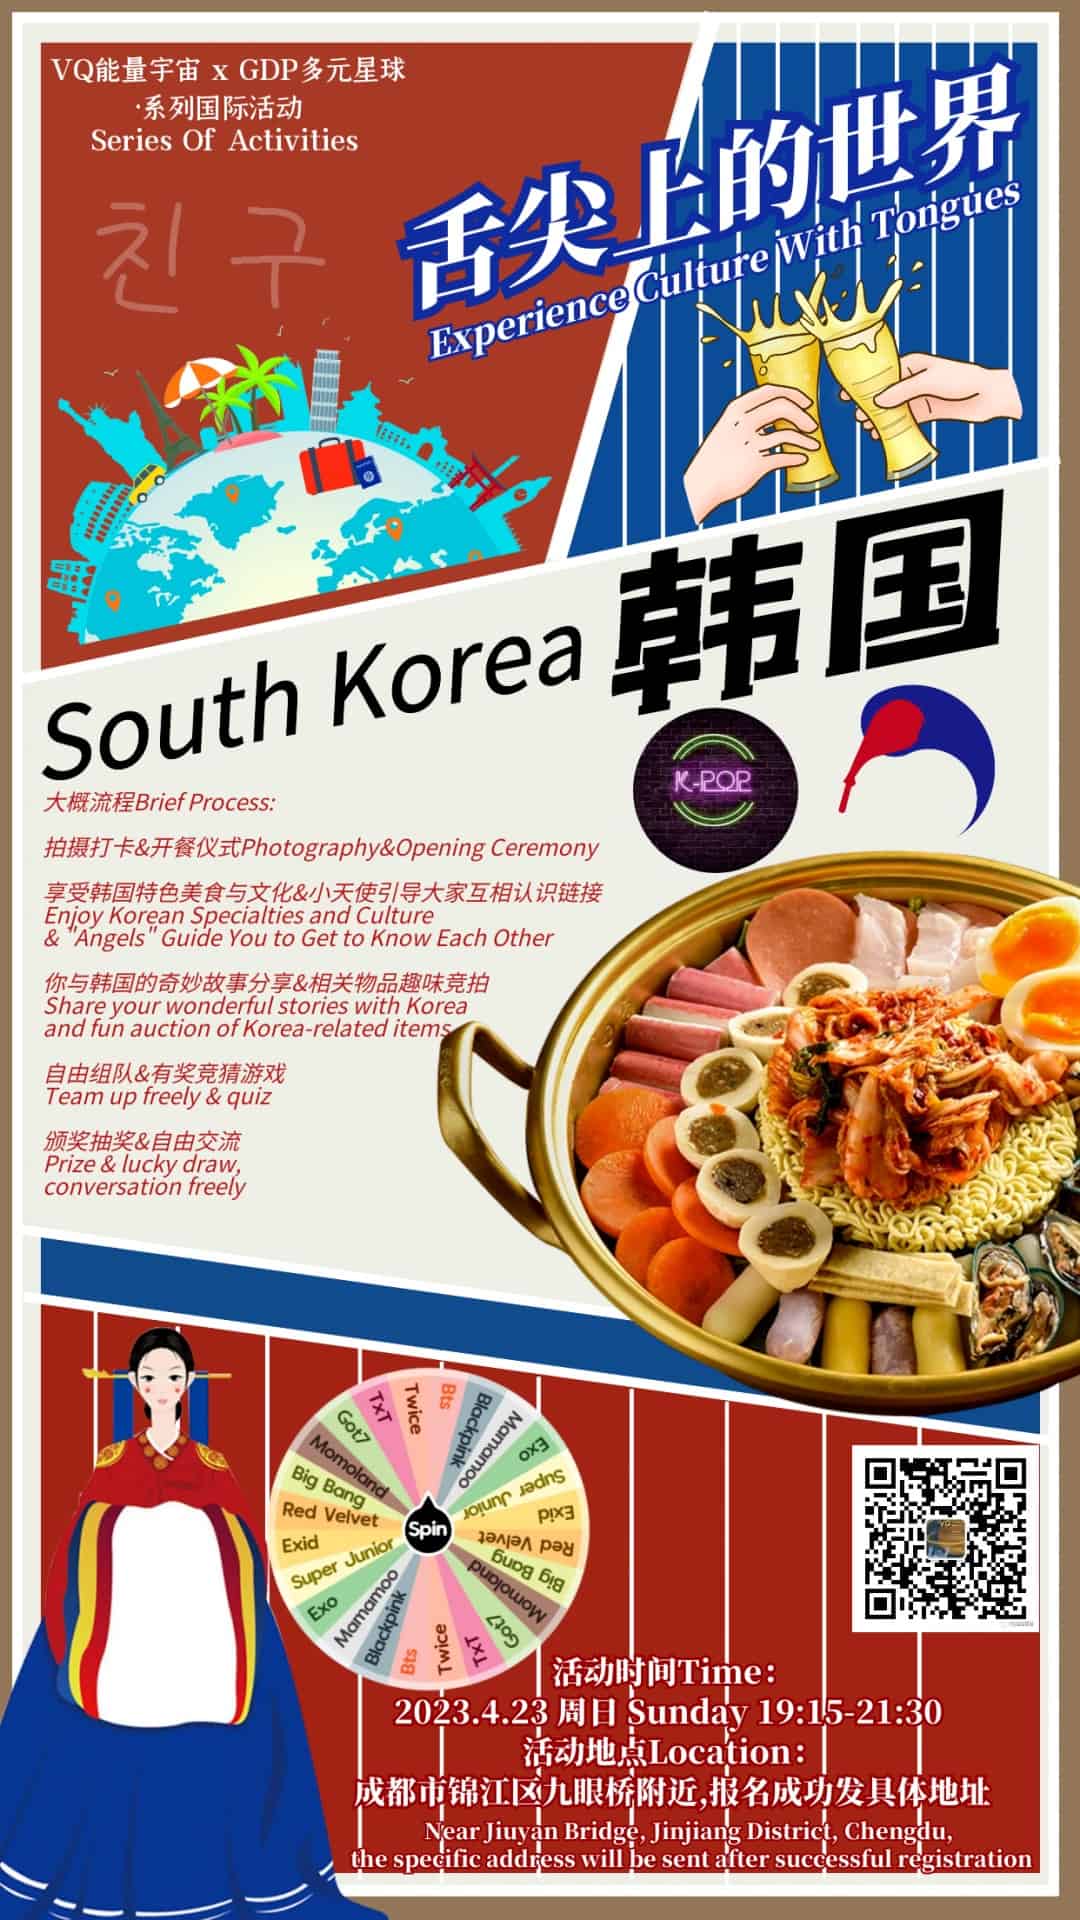 April 23 South Korea Culture With Tongues chengdu expat